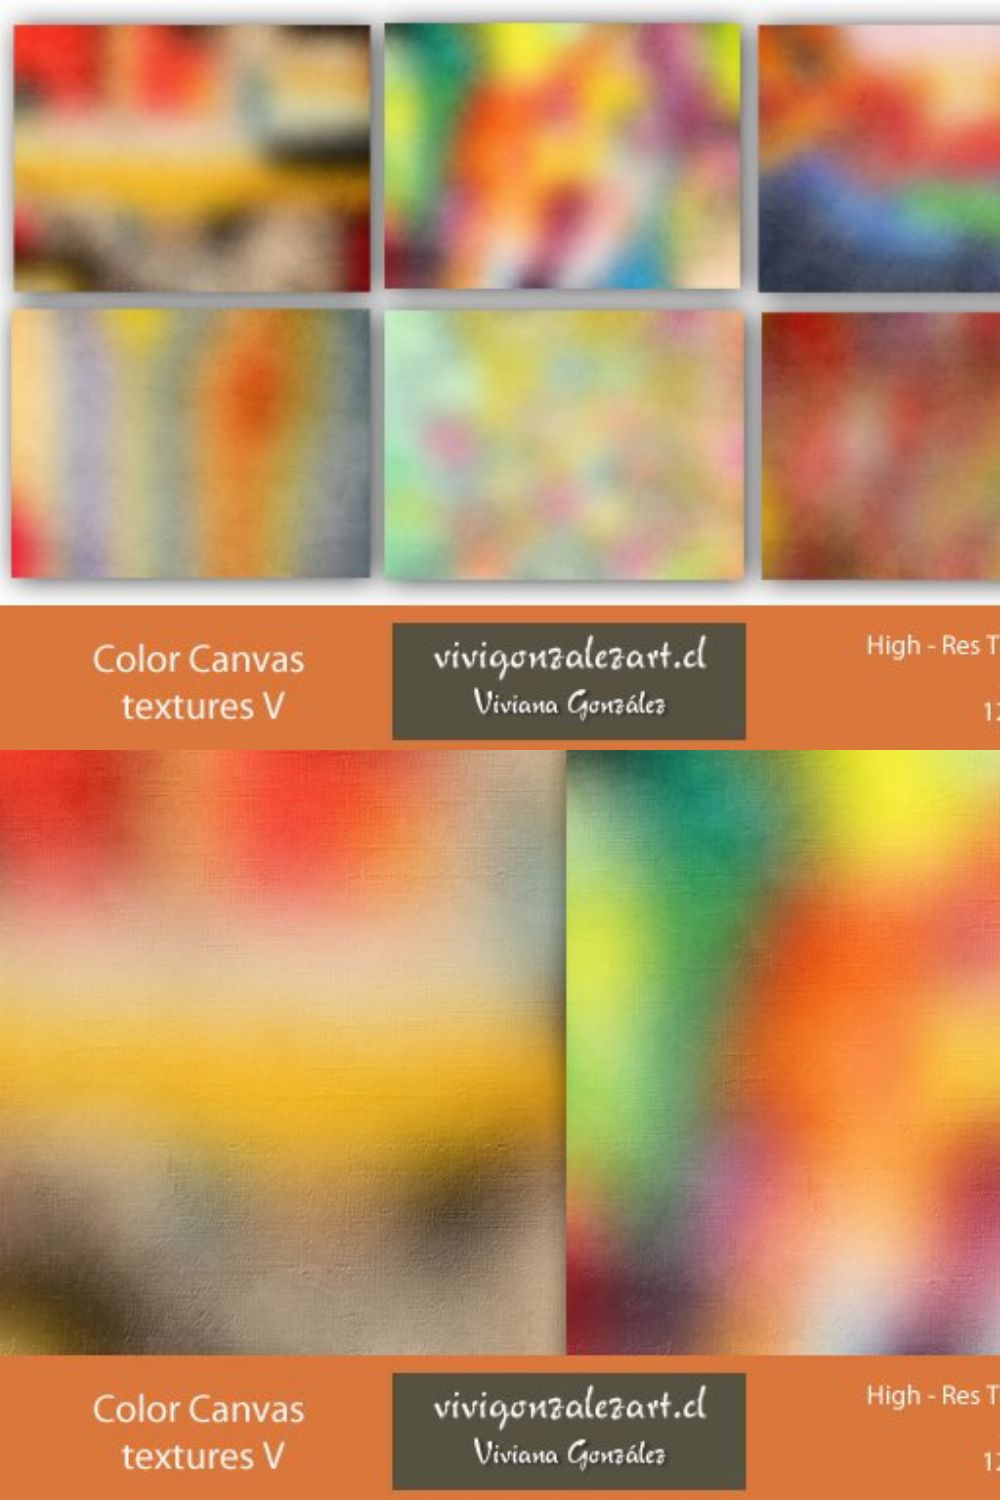 Color canvas textures V pinterest preview image.